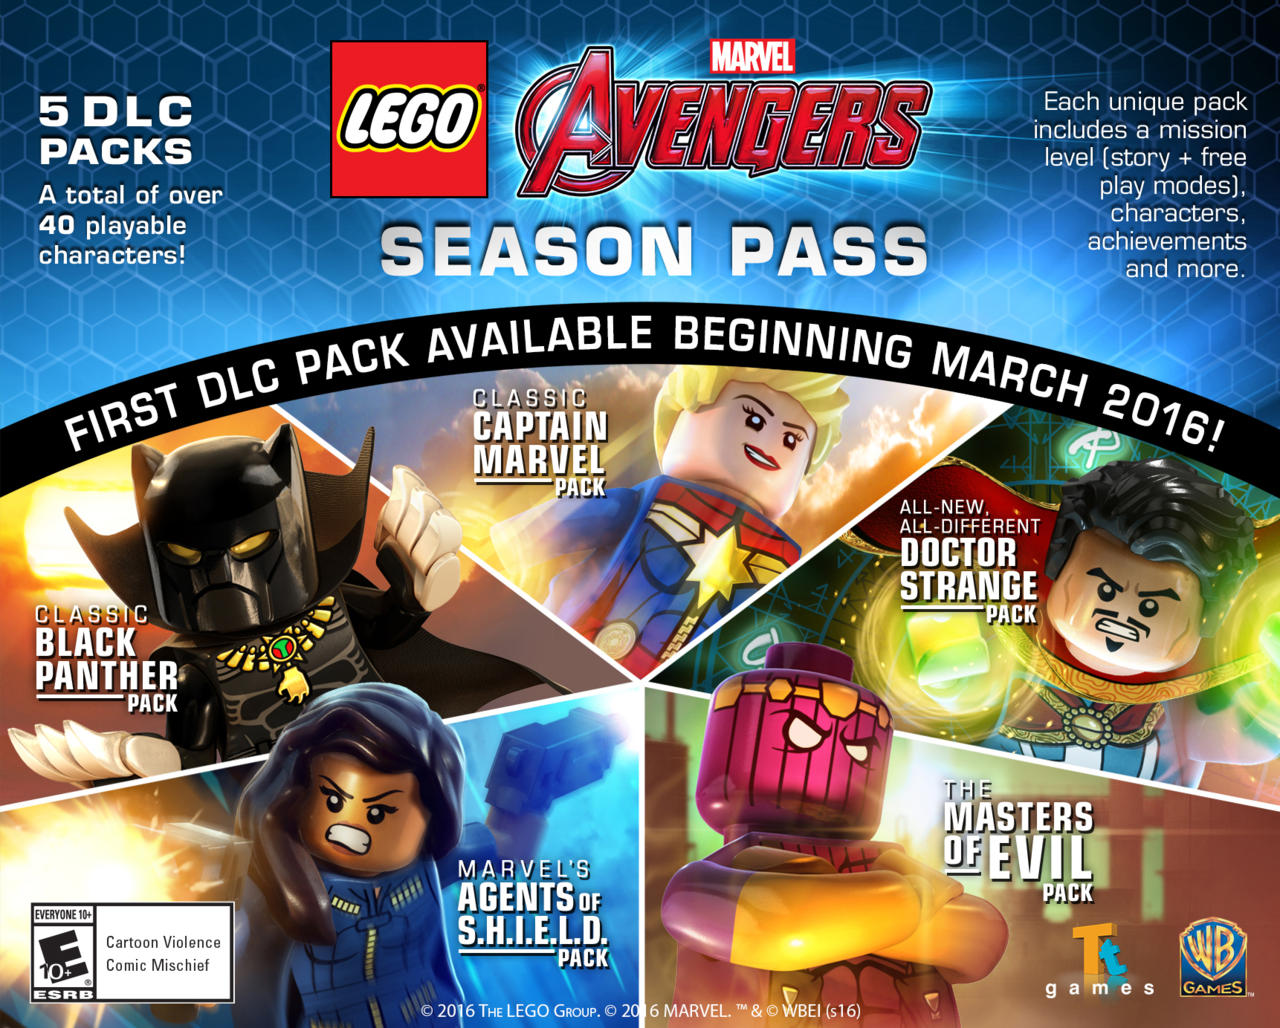 Ræv pant tyran Lego Avengers DLC Season Pass Detailed - GameSpot